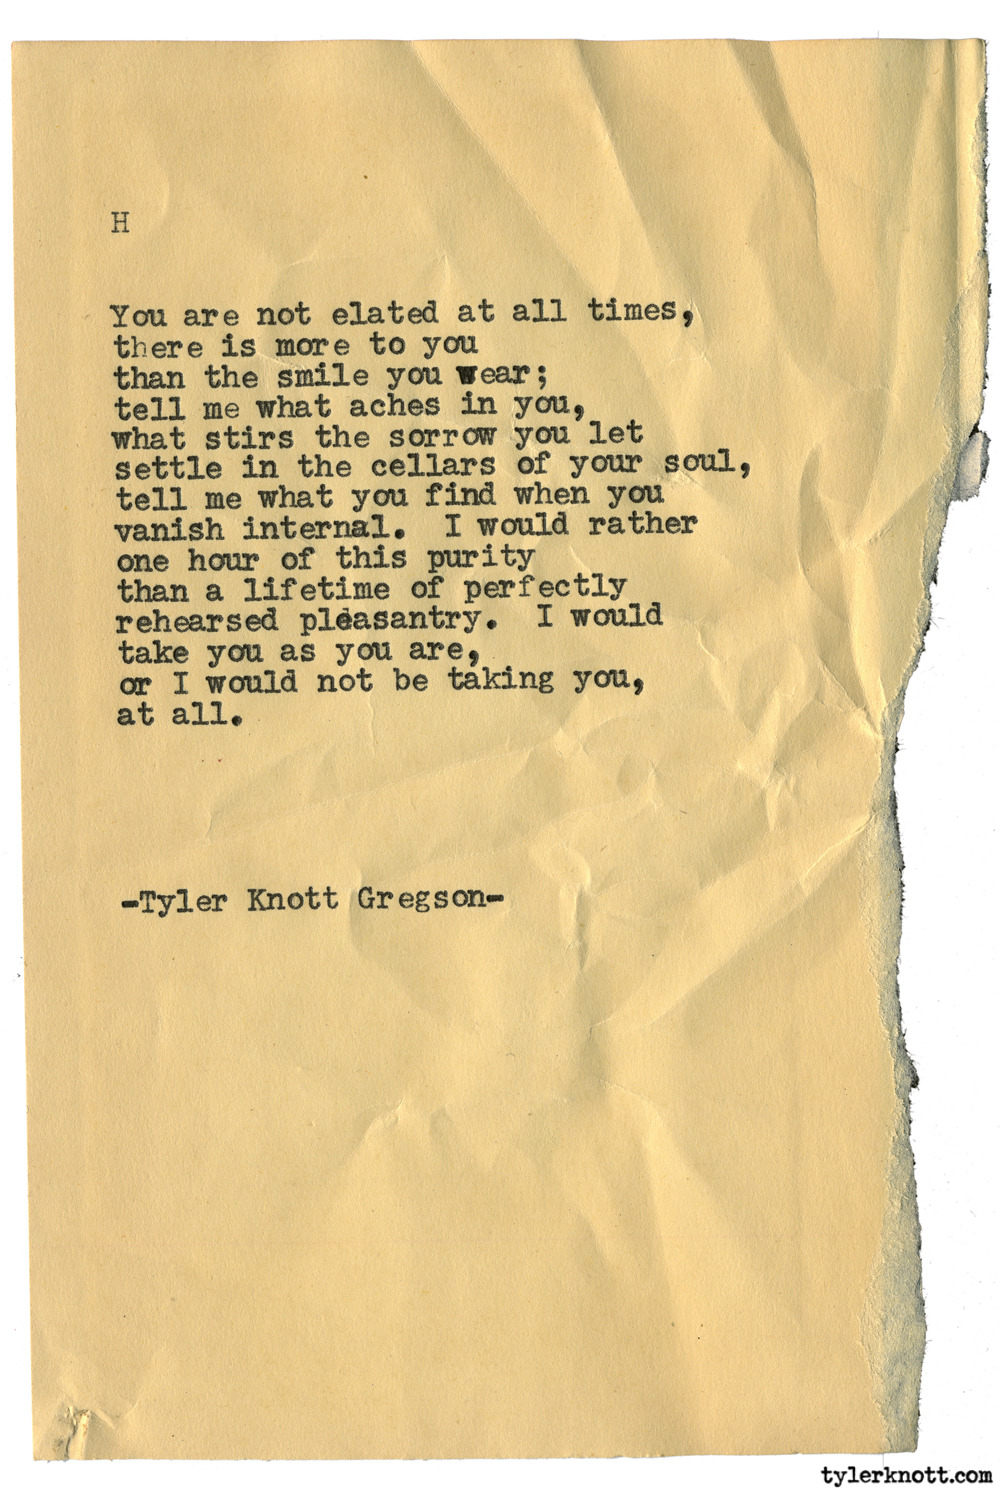 Tyler Knott Gregson — Typewriter Series #1620 by Tyler Knott Gregson...